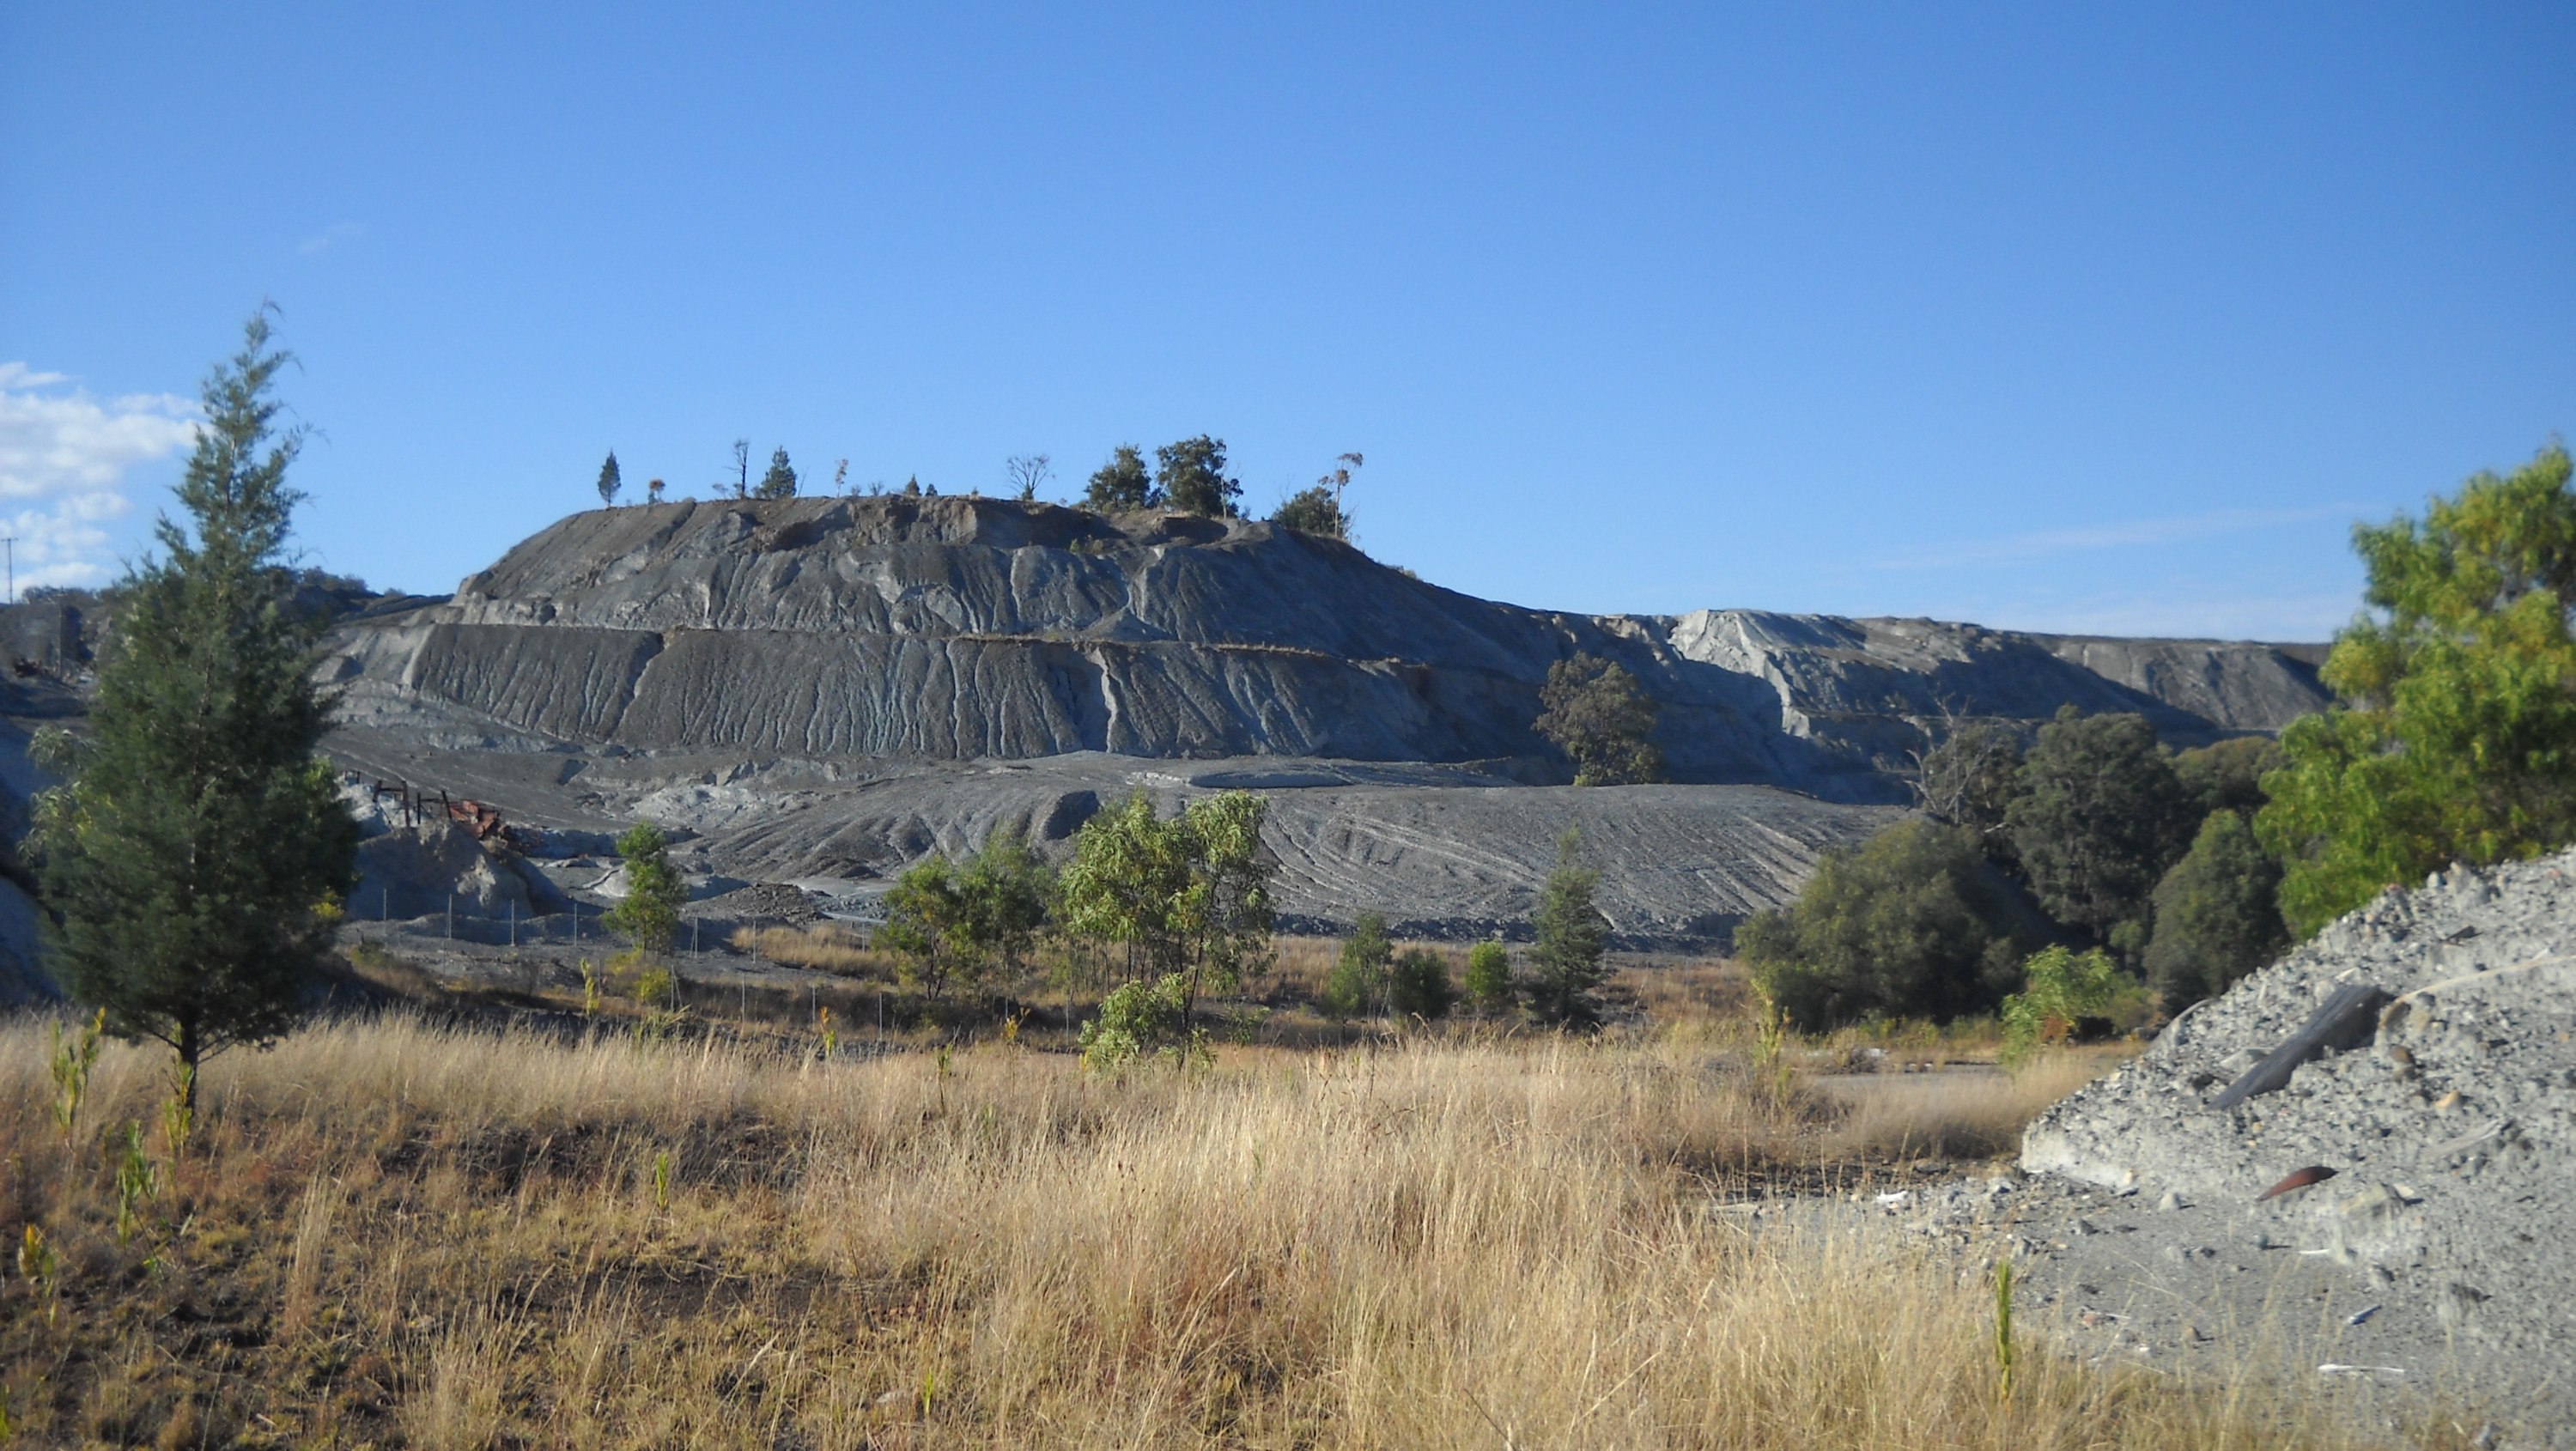 Woodsreef mine in New South Wales, Australia.